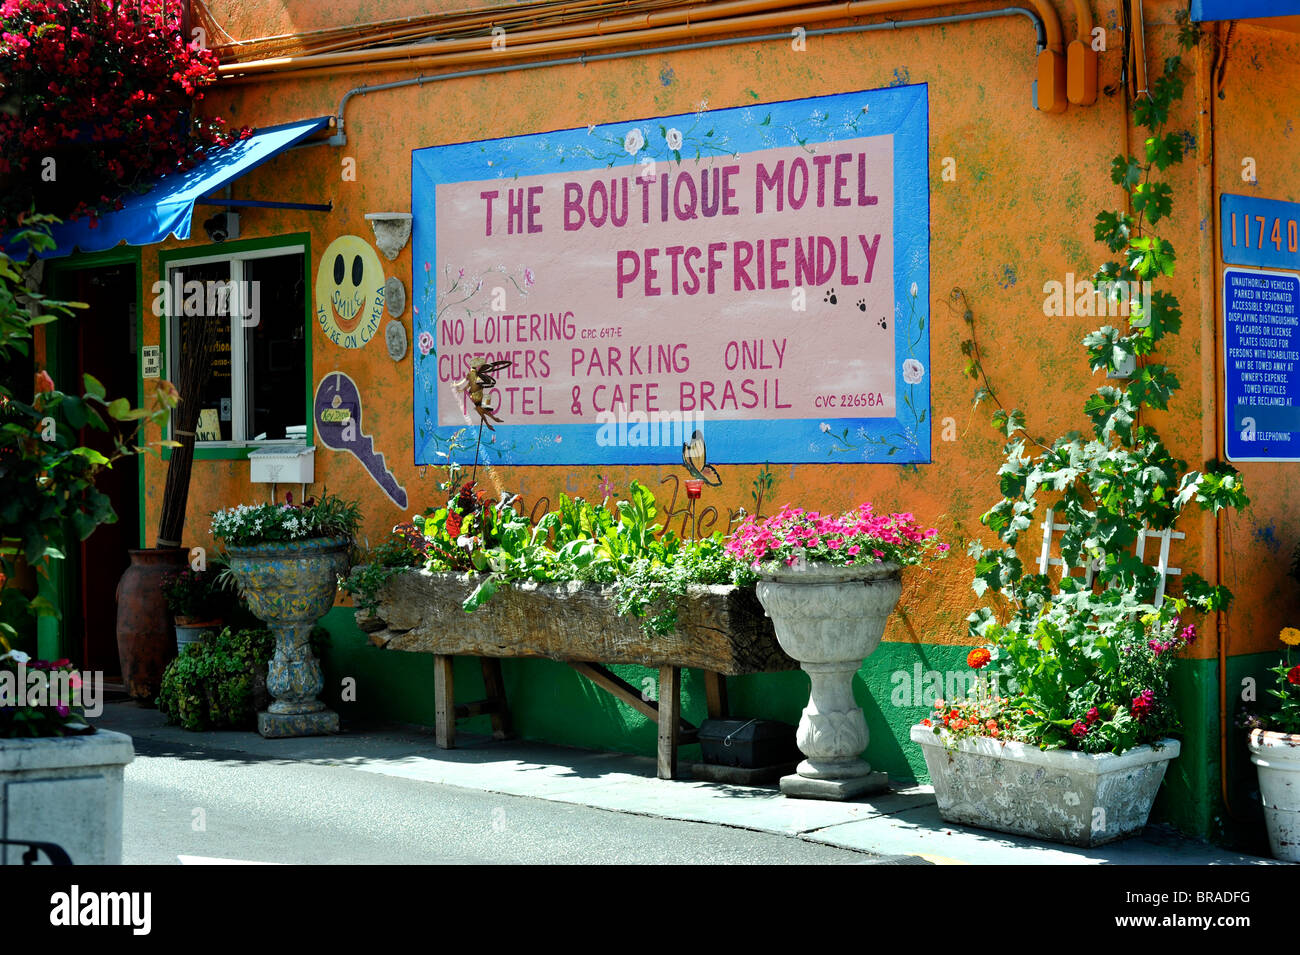 Cafe Brasil di Culver City Los Angeles è un elegante pet friendly motel-cafe. Foto Stock